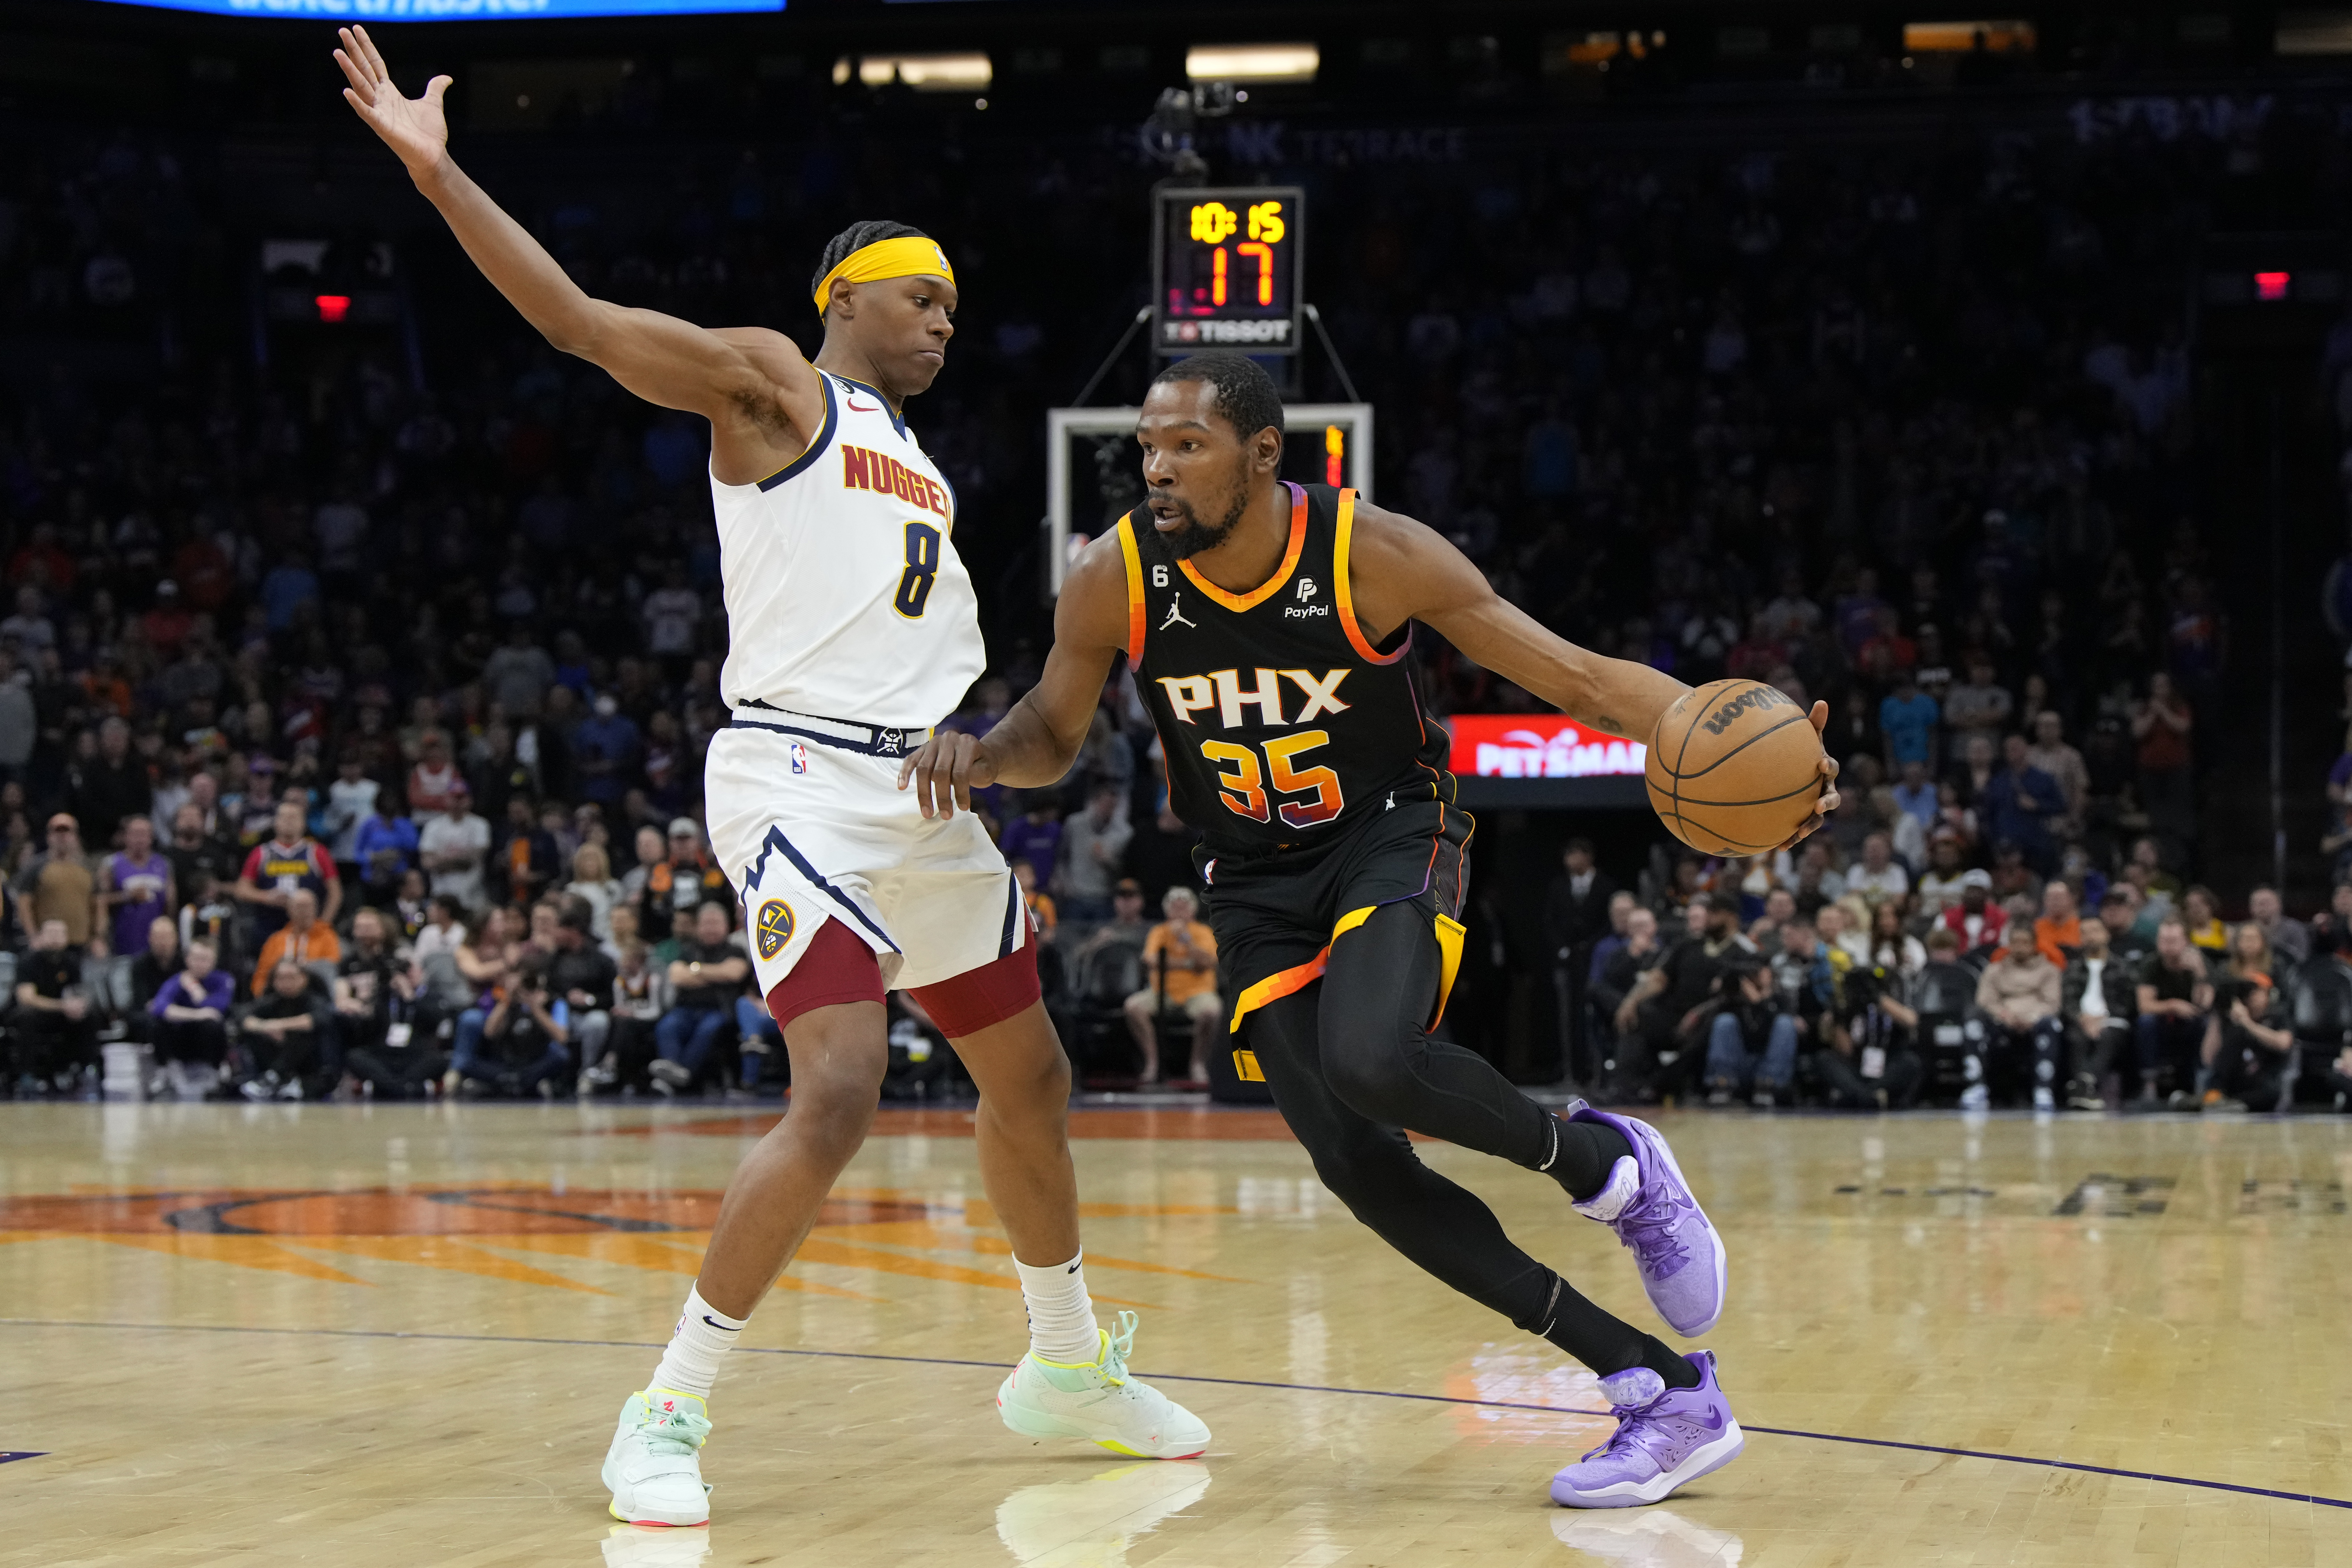 NBA Finals: How To Watch Game 6 Of Phoenix Suns-Bucks Series